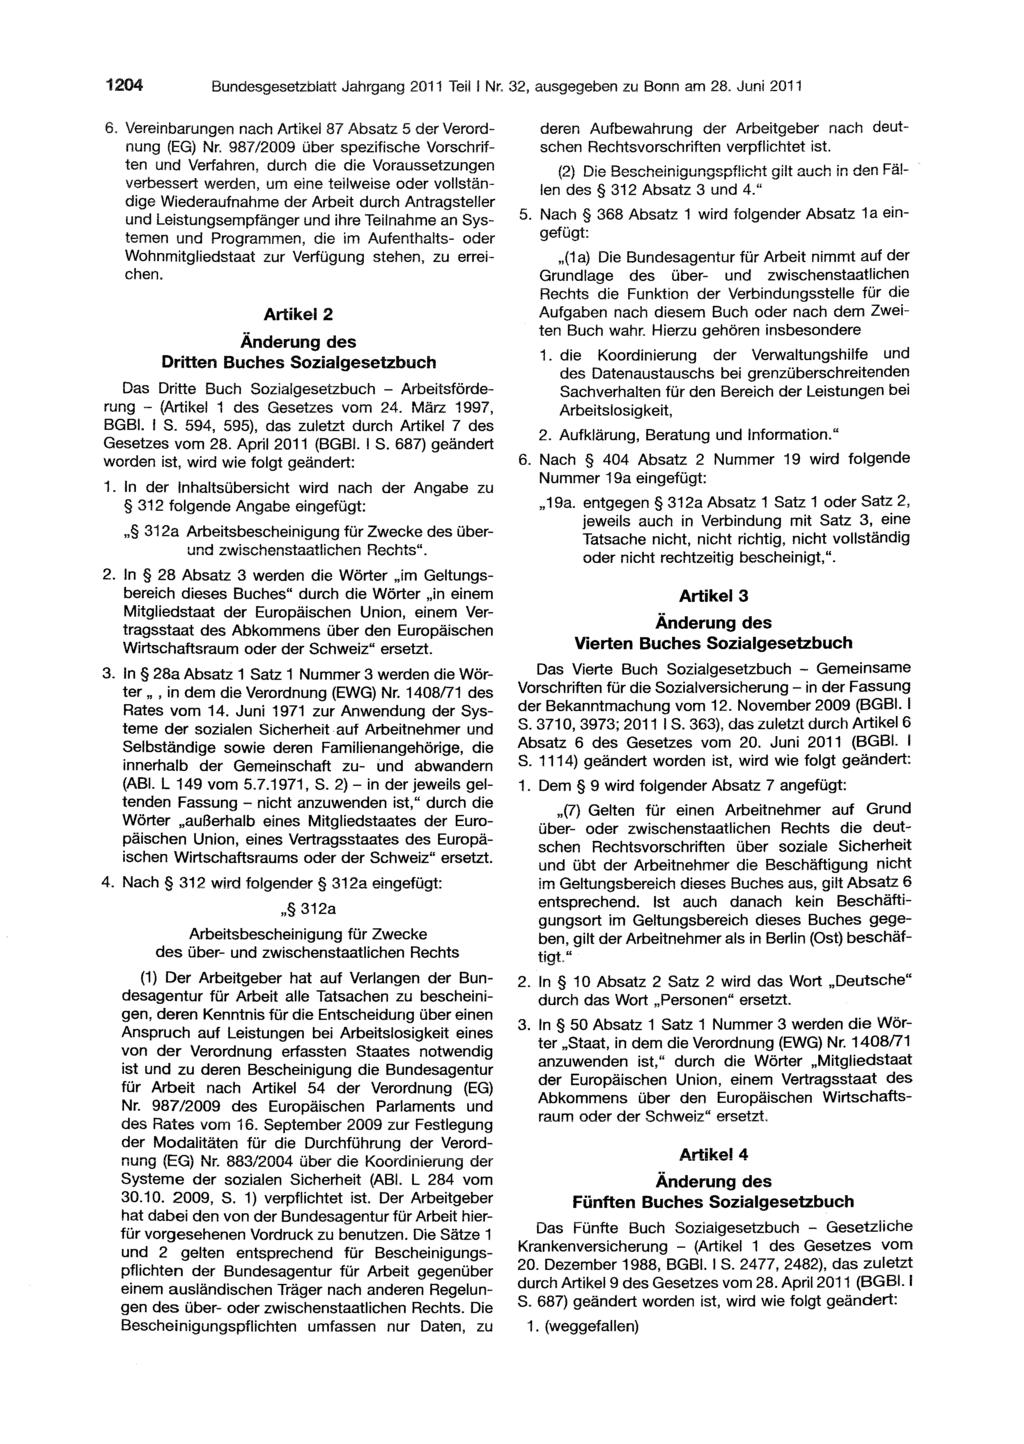 120 mdesgesetzblatl Jahrgang 2011 Teil I Nr. 2, ausgegeben zu 80nn am 28. Juni 201 Artikel 2 Änderung des Dritten Buches Sozialgesetzbuch 6.